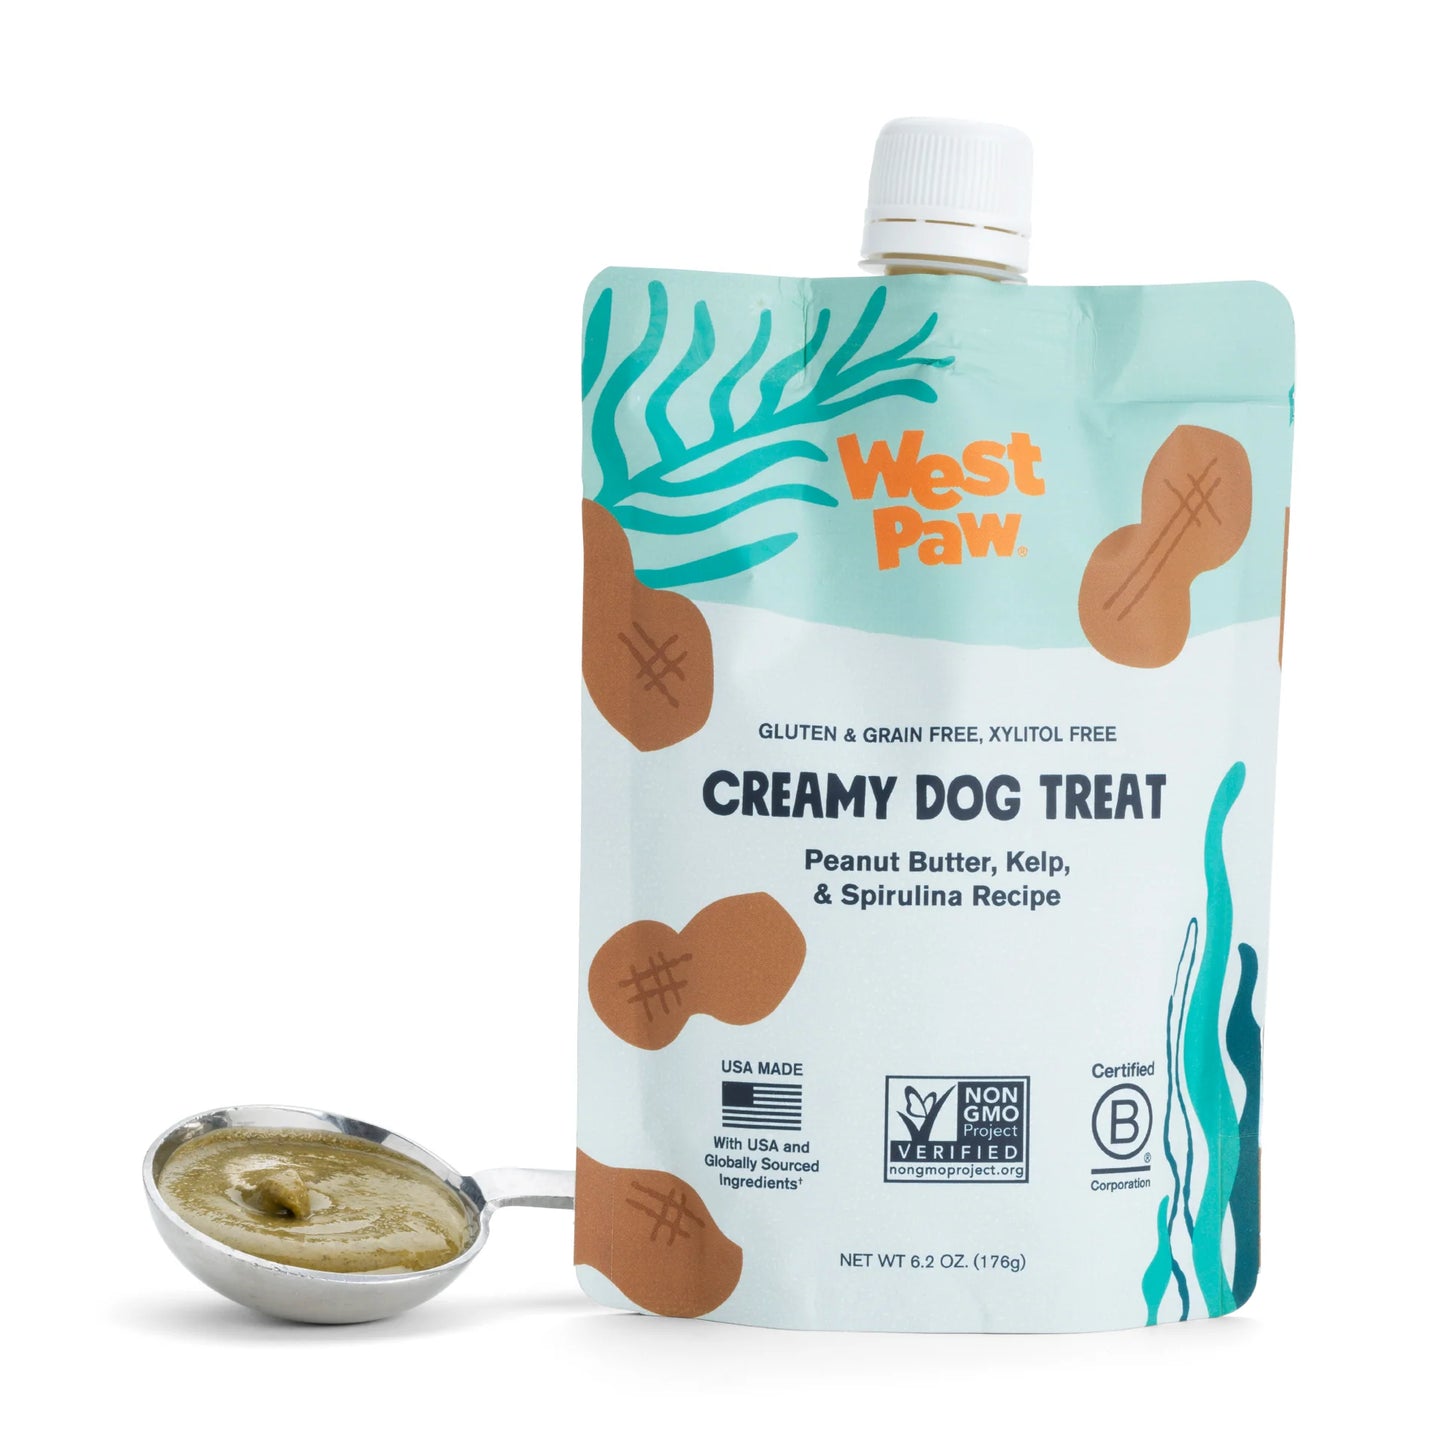 Peanut Butter, Kelp, Spirulina Creamy Dog Treat